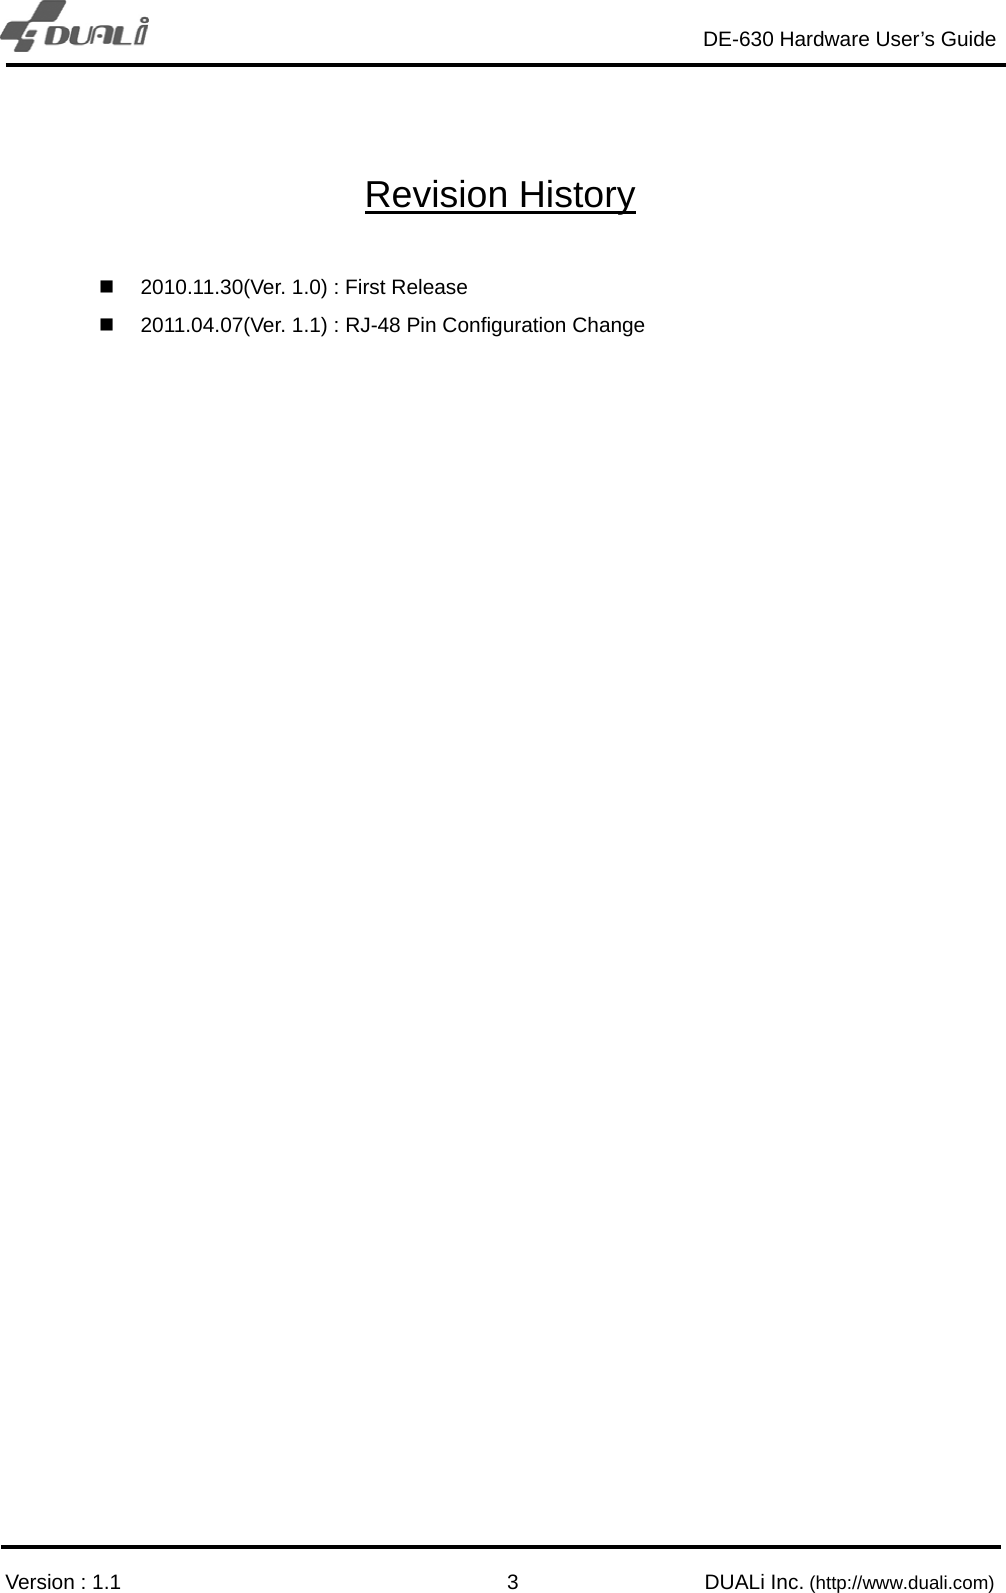                                                                DE-630 Hardware User’s Guide        Version : 1.1                                                        DUALi Inc. (http://www.duali.com) 3 Revision History    2010.11.30(Ver. 1.0) : First Release   2011.04.07(Ver. 1.1) : RJ-48 Pin Configuration Change  